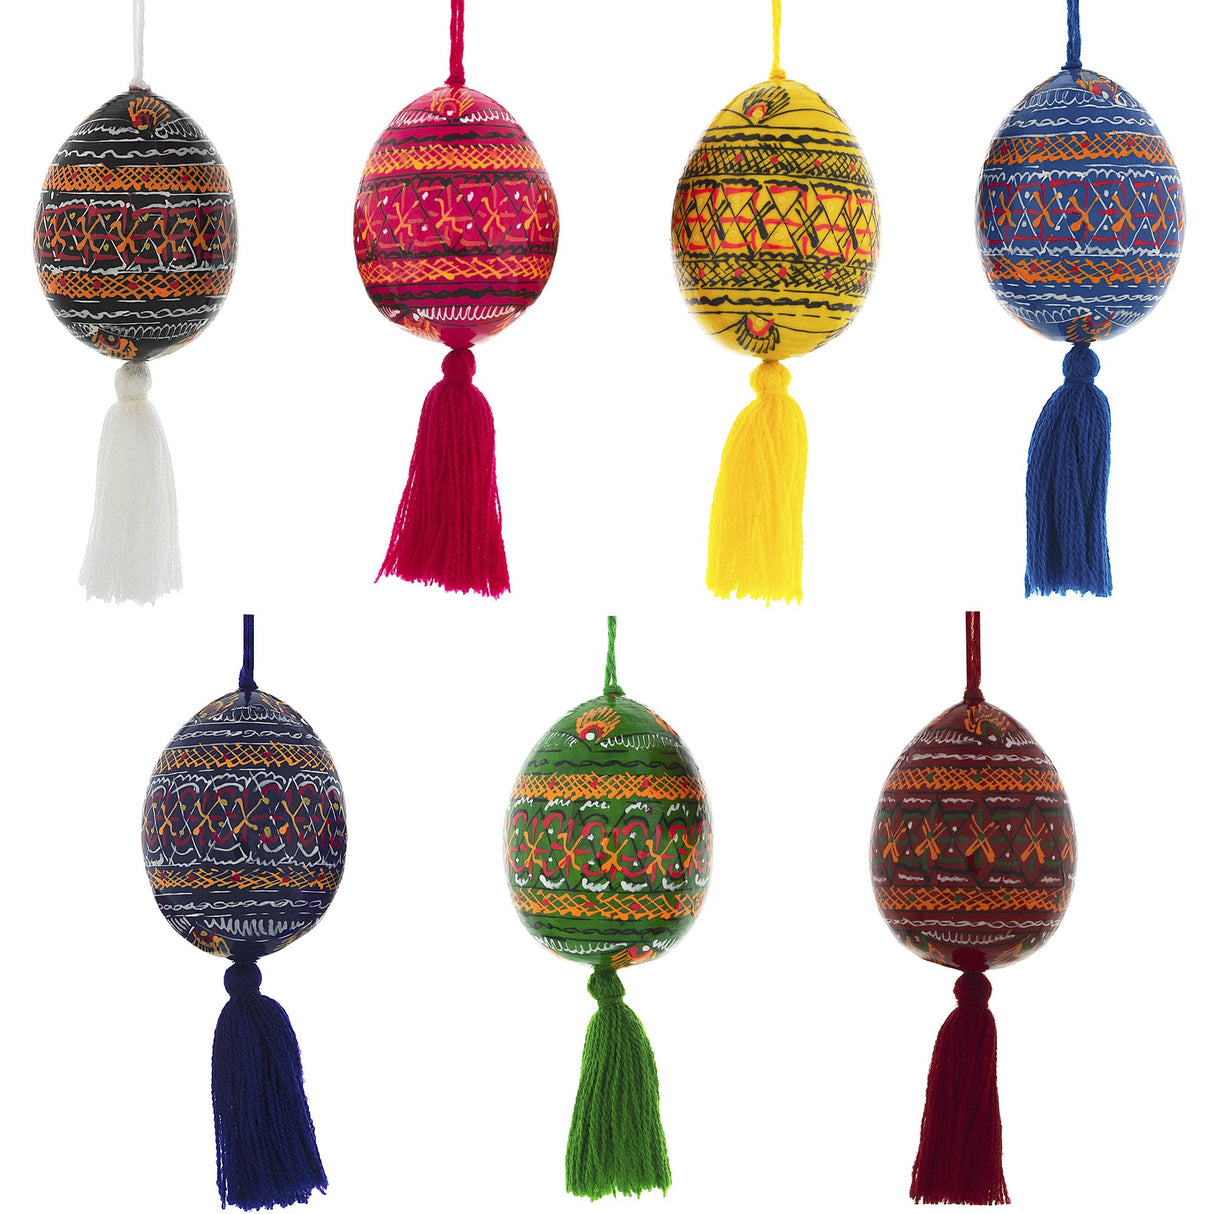 Set of 7 Wooden Ukrainian Easter Egg Ornaments in Multi color, Oval shape